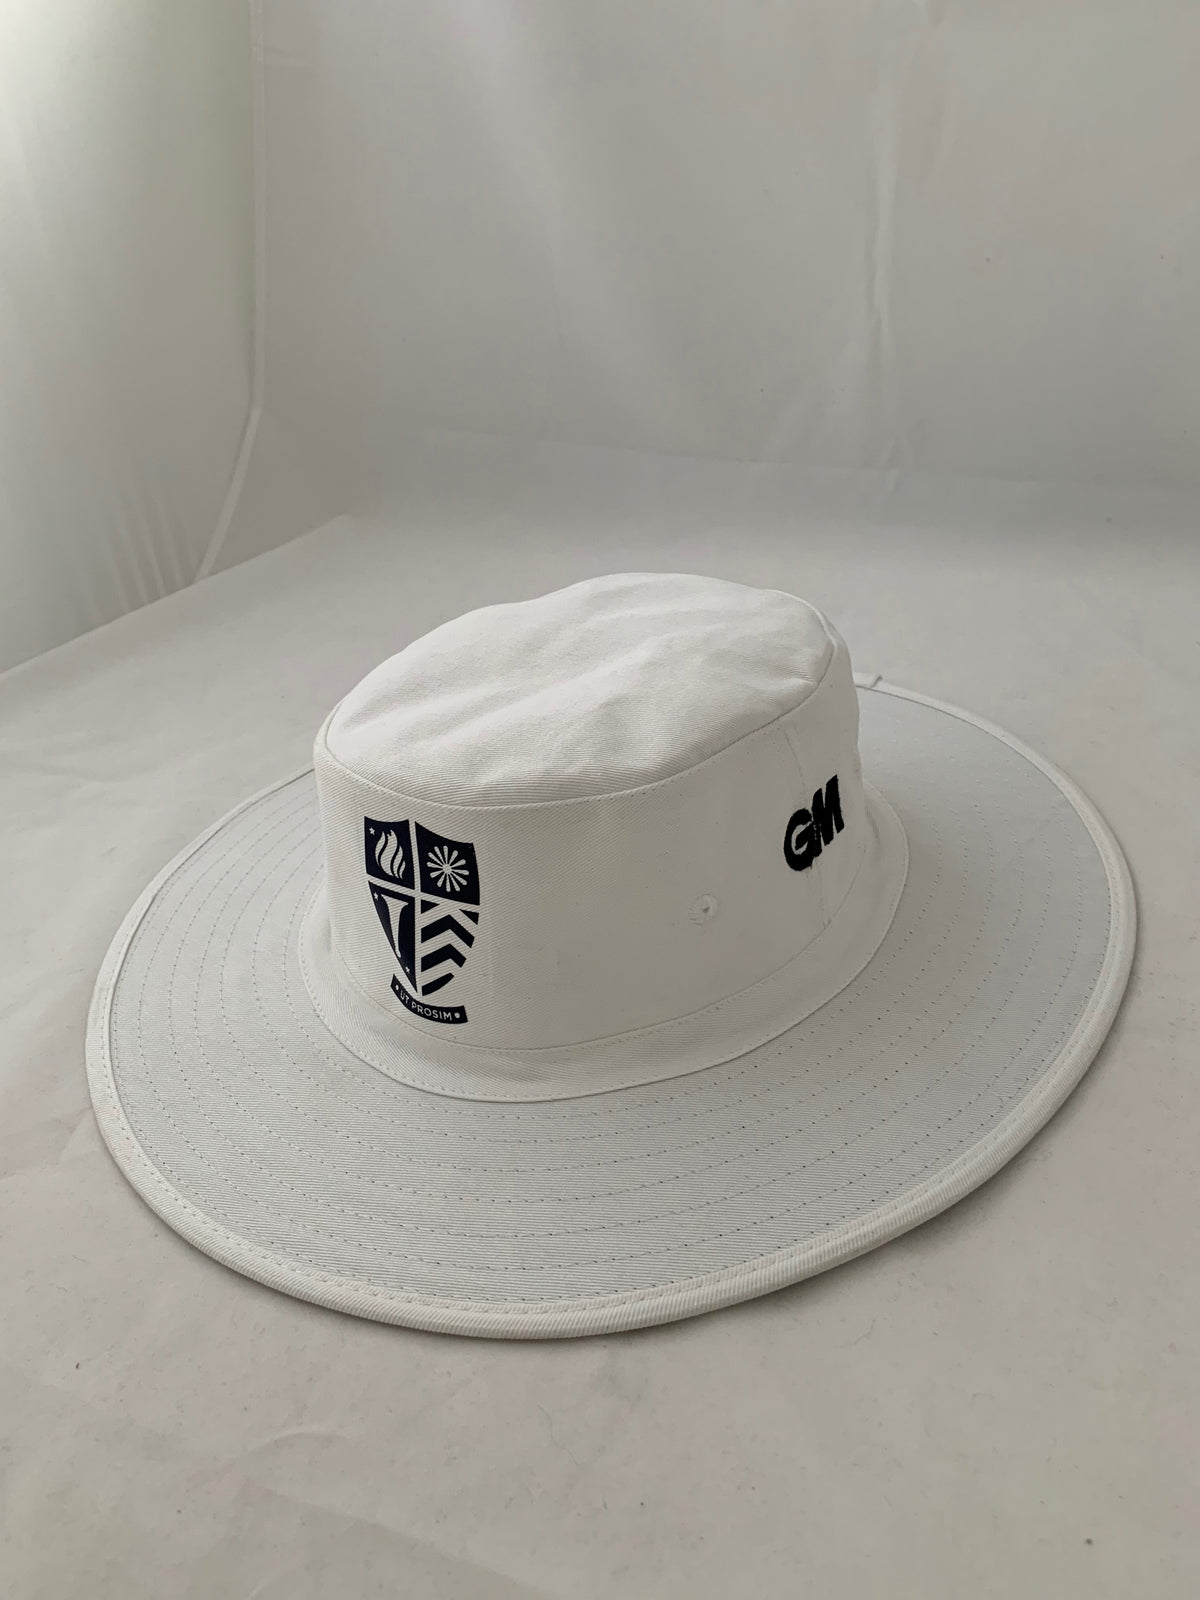 Ryde School Cricket Hat